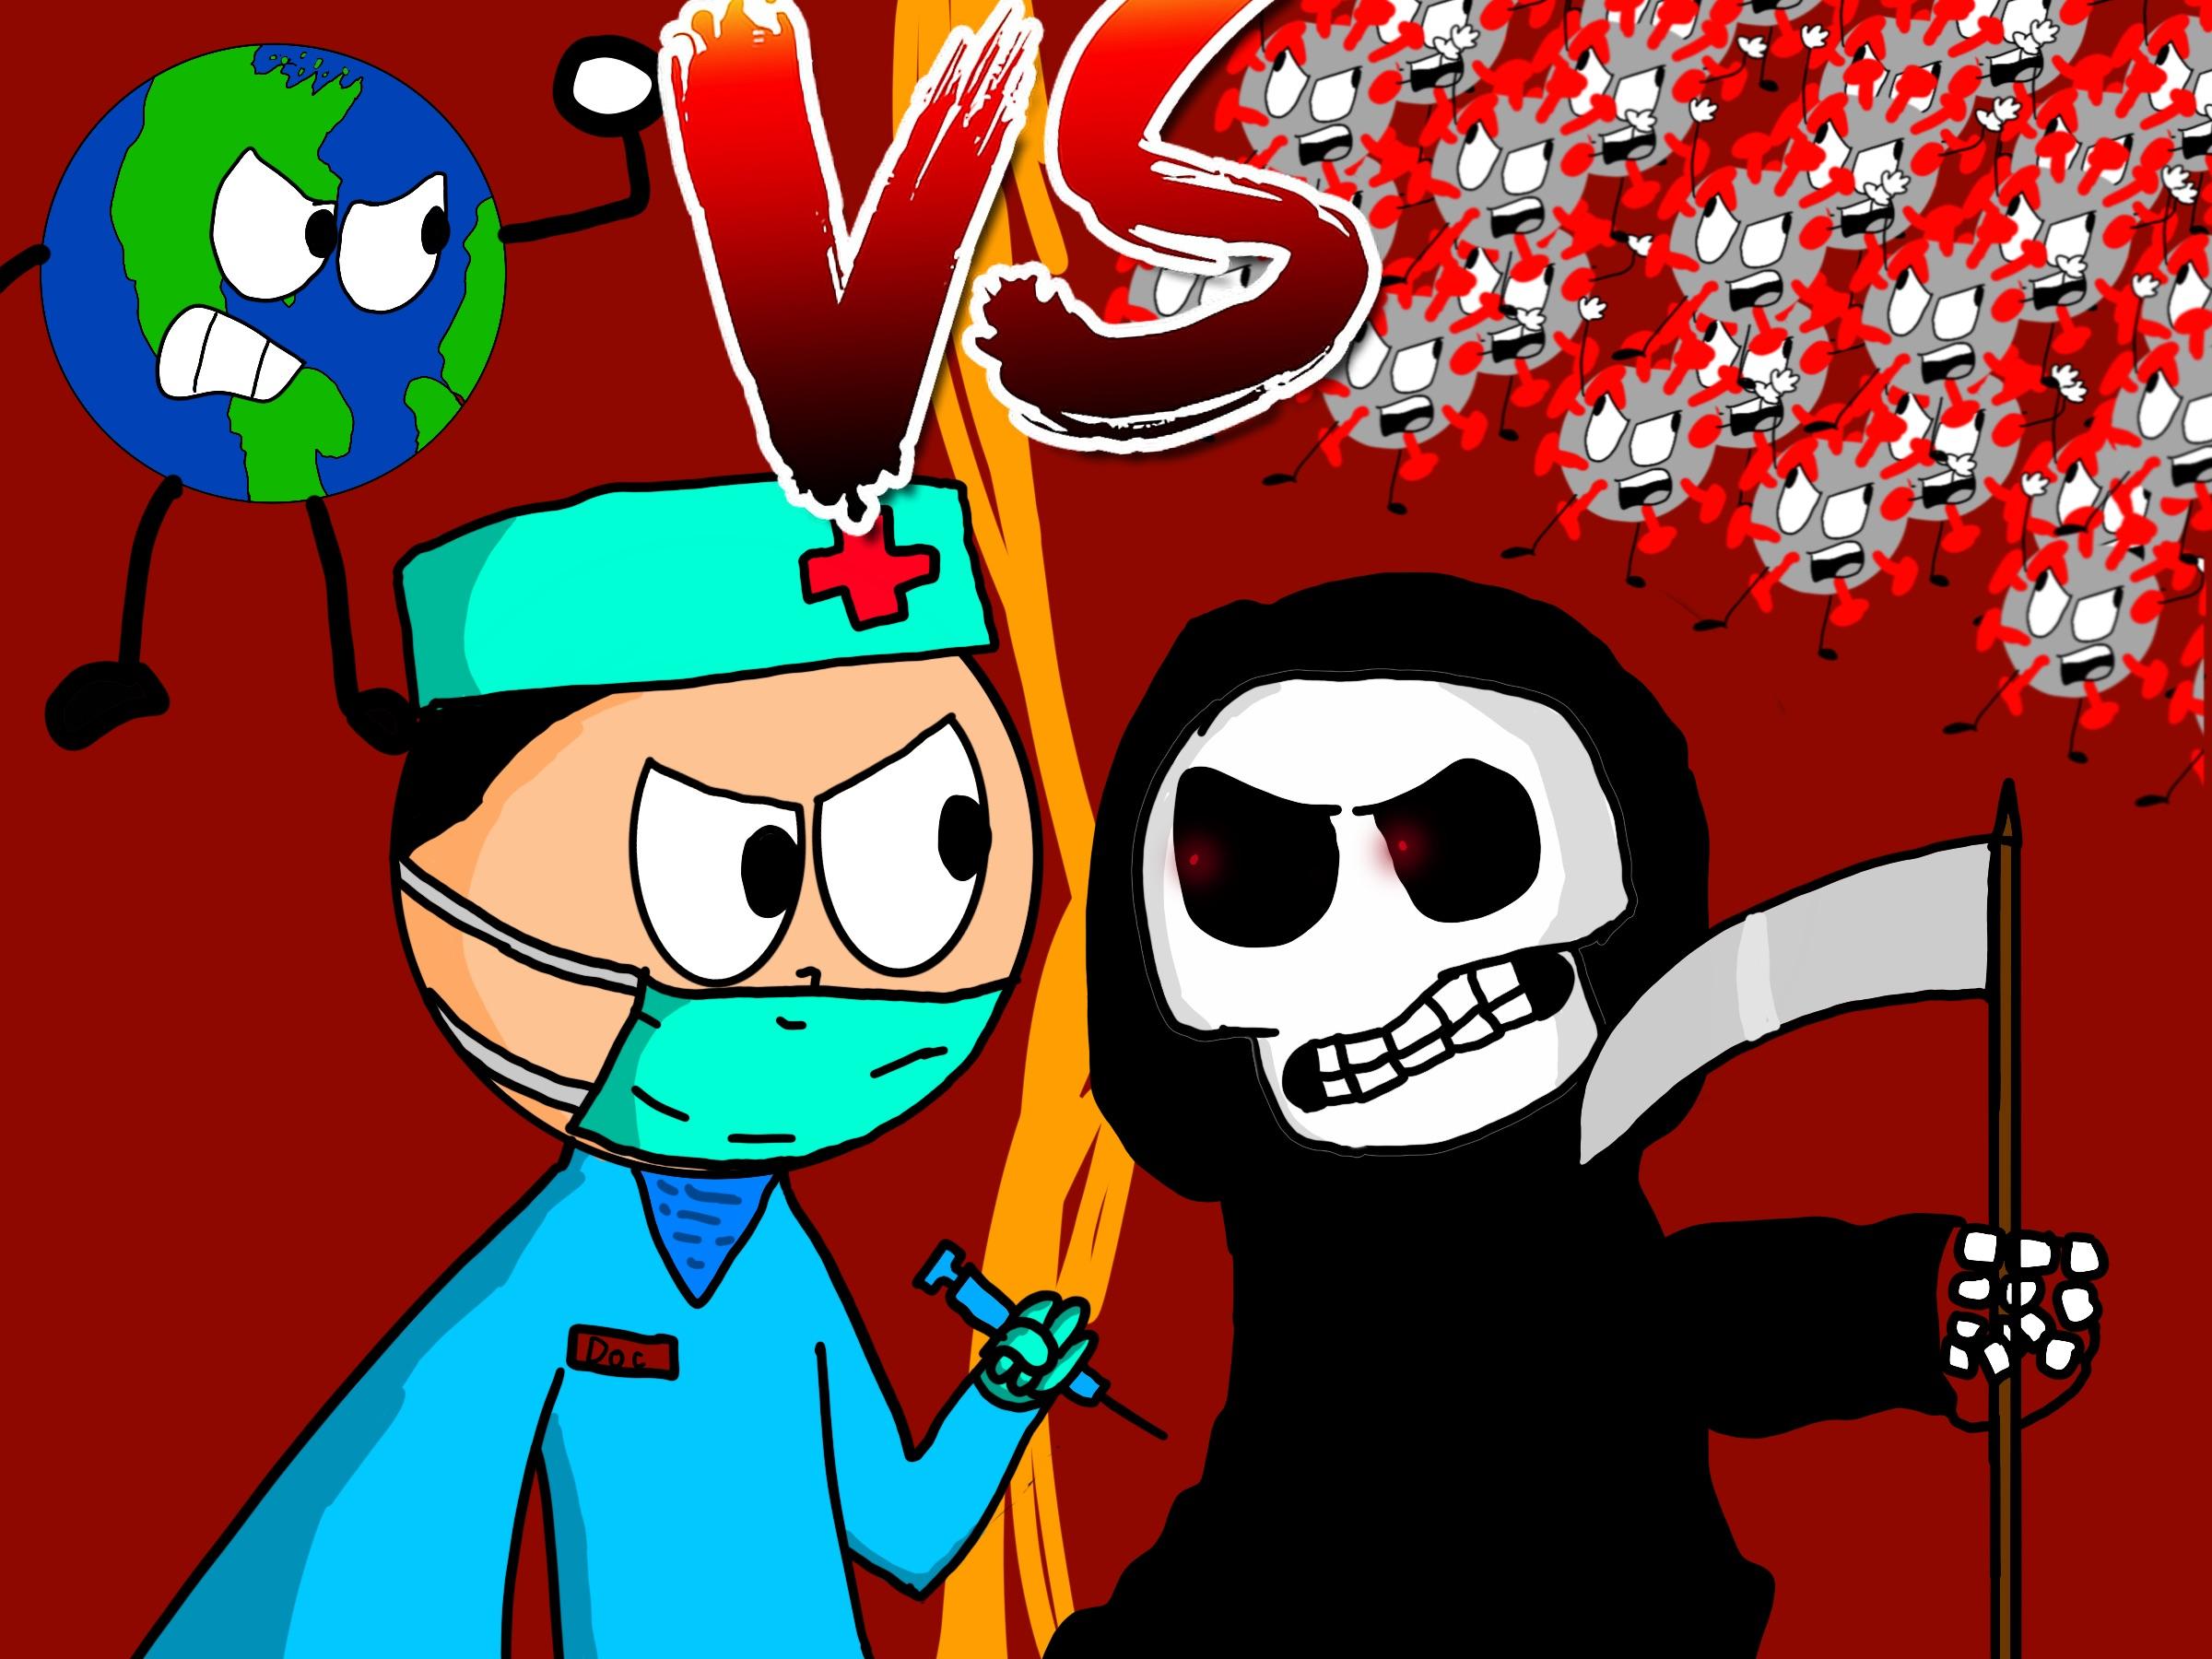 Doctors fighting Corona by Fabian